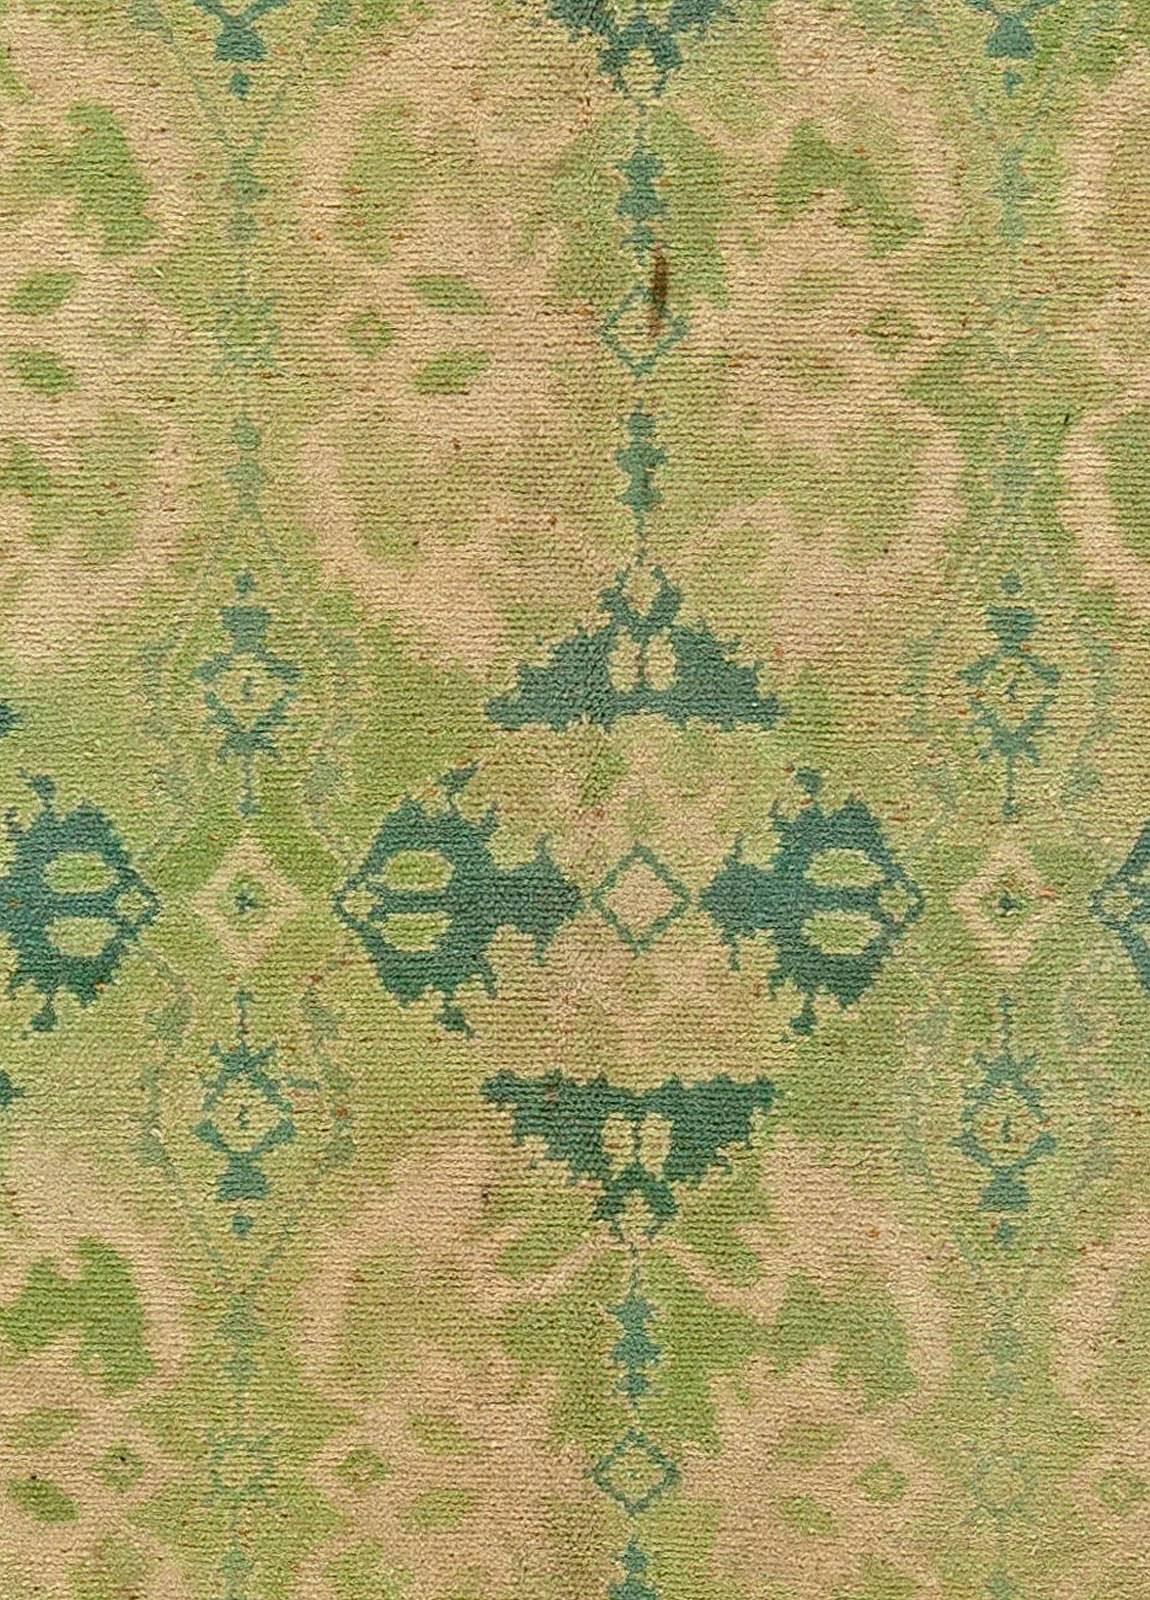 Green Vintage Spanish Savonnerie rug
Size: 6'0